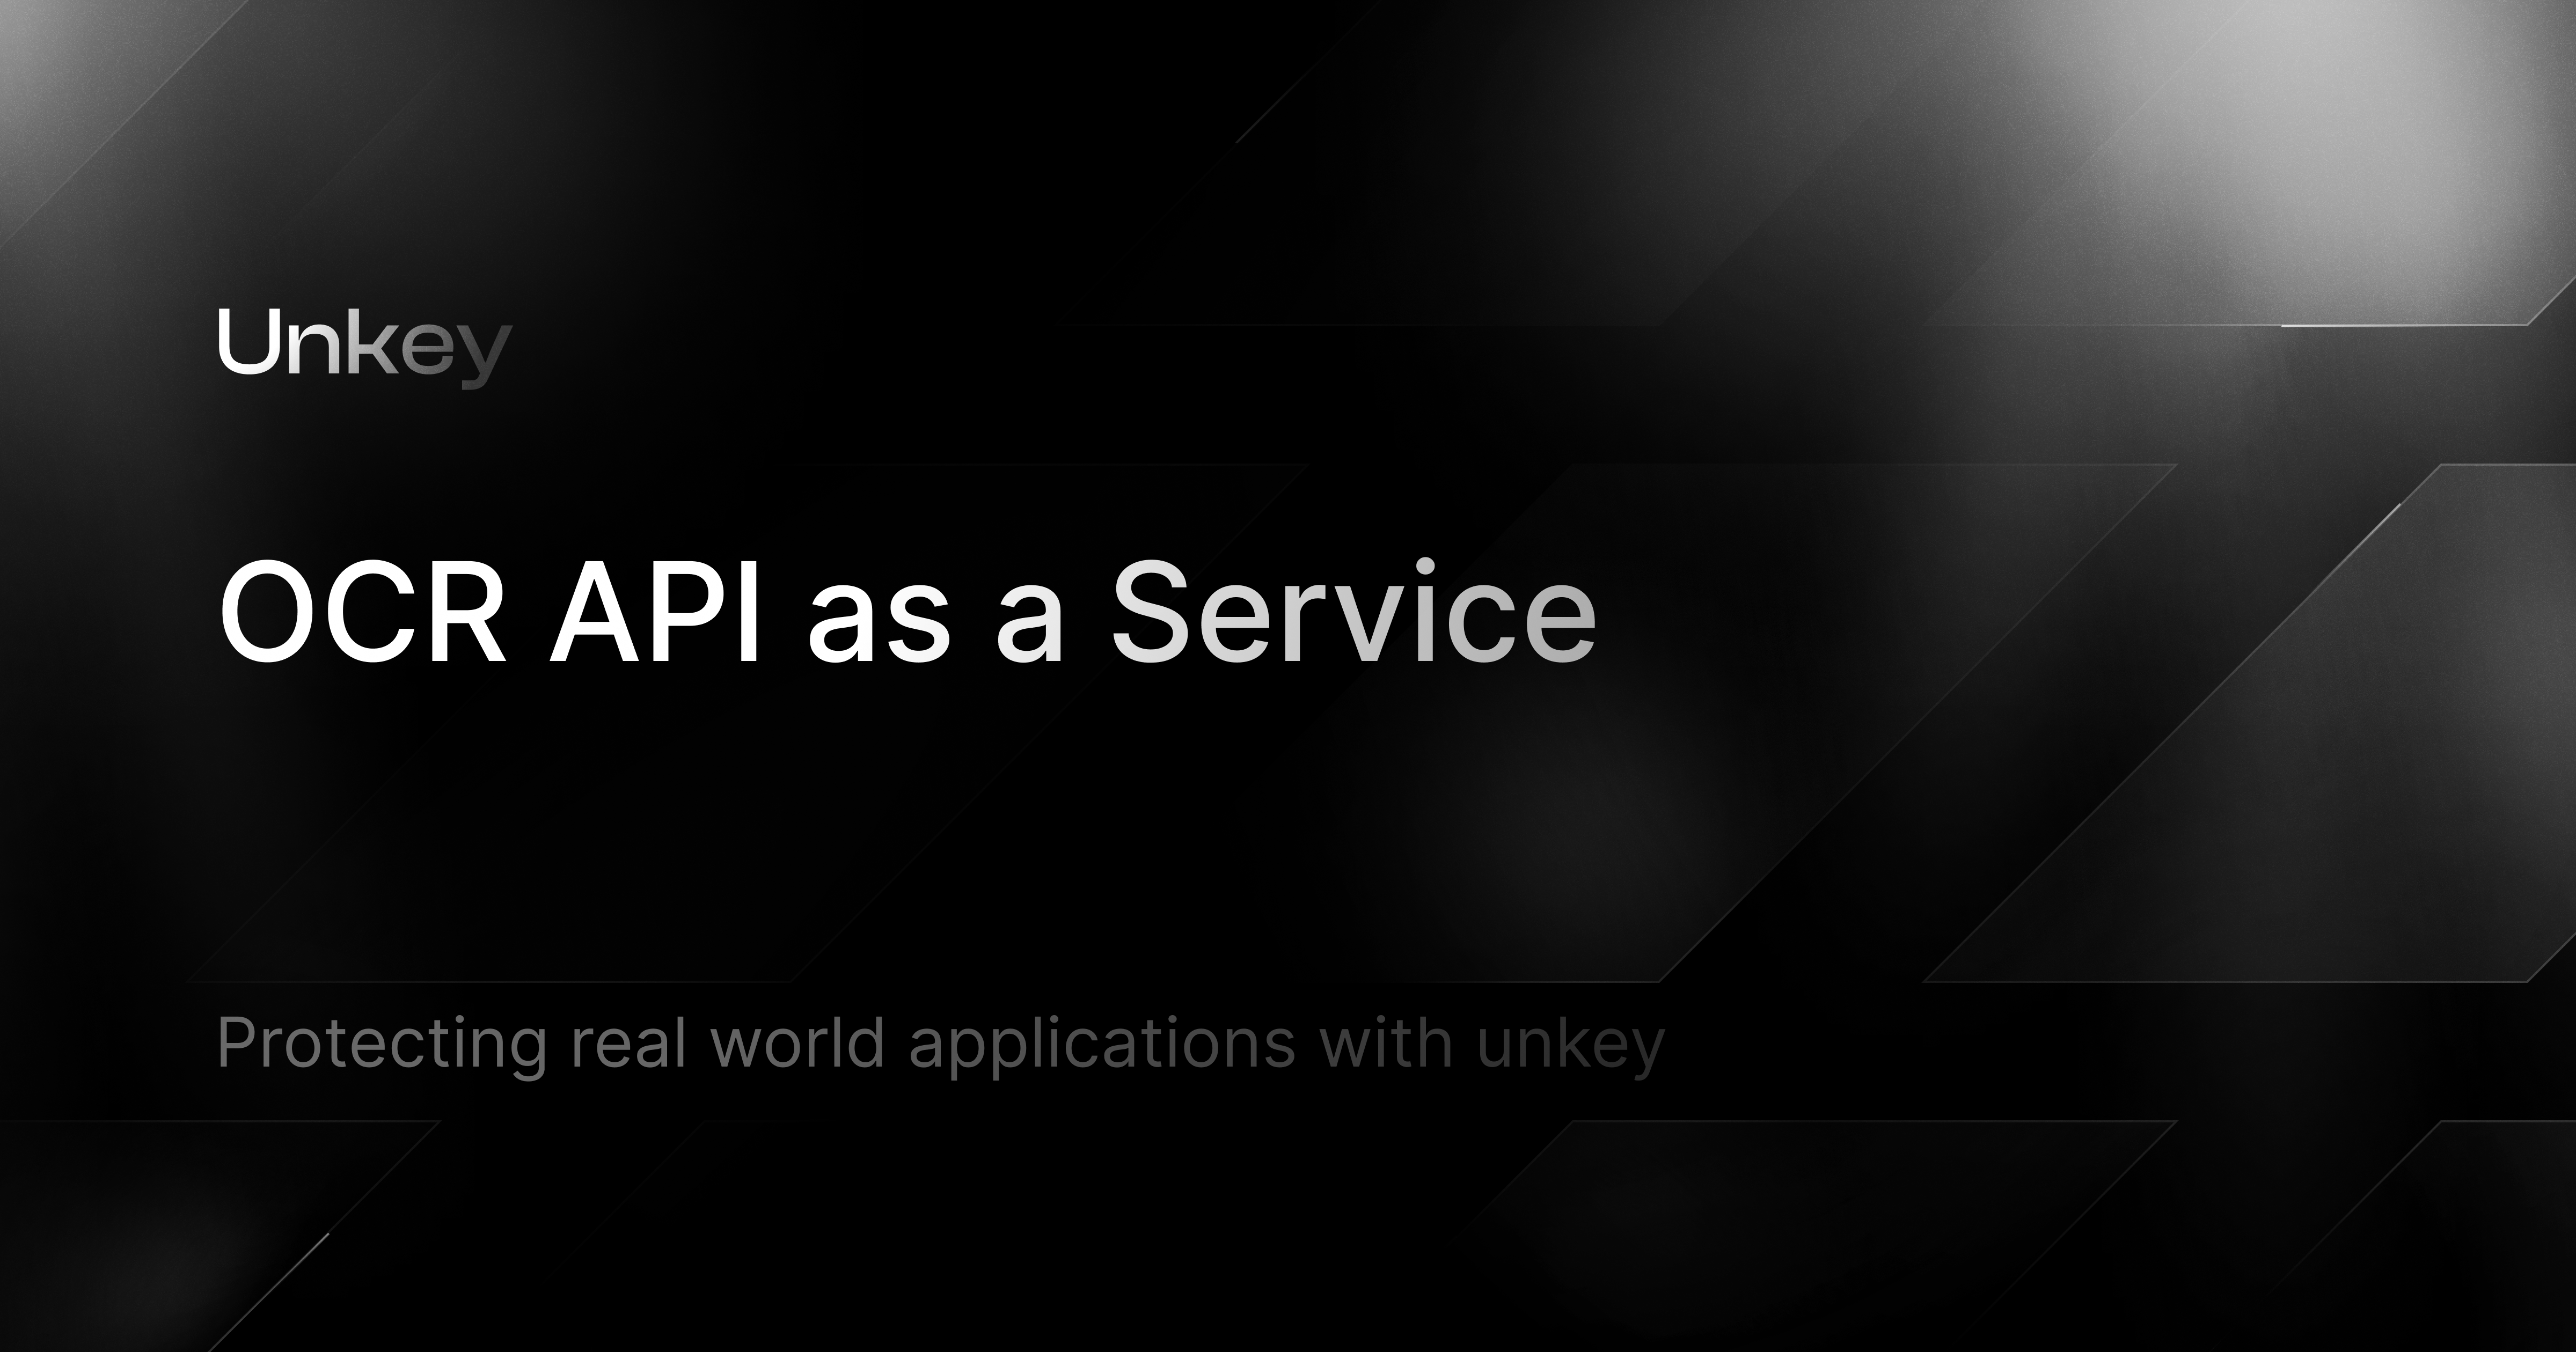 OCR API as a Service using Unkey